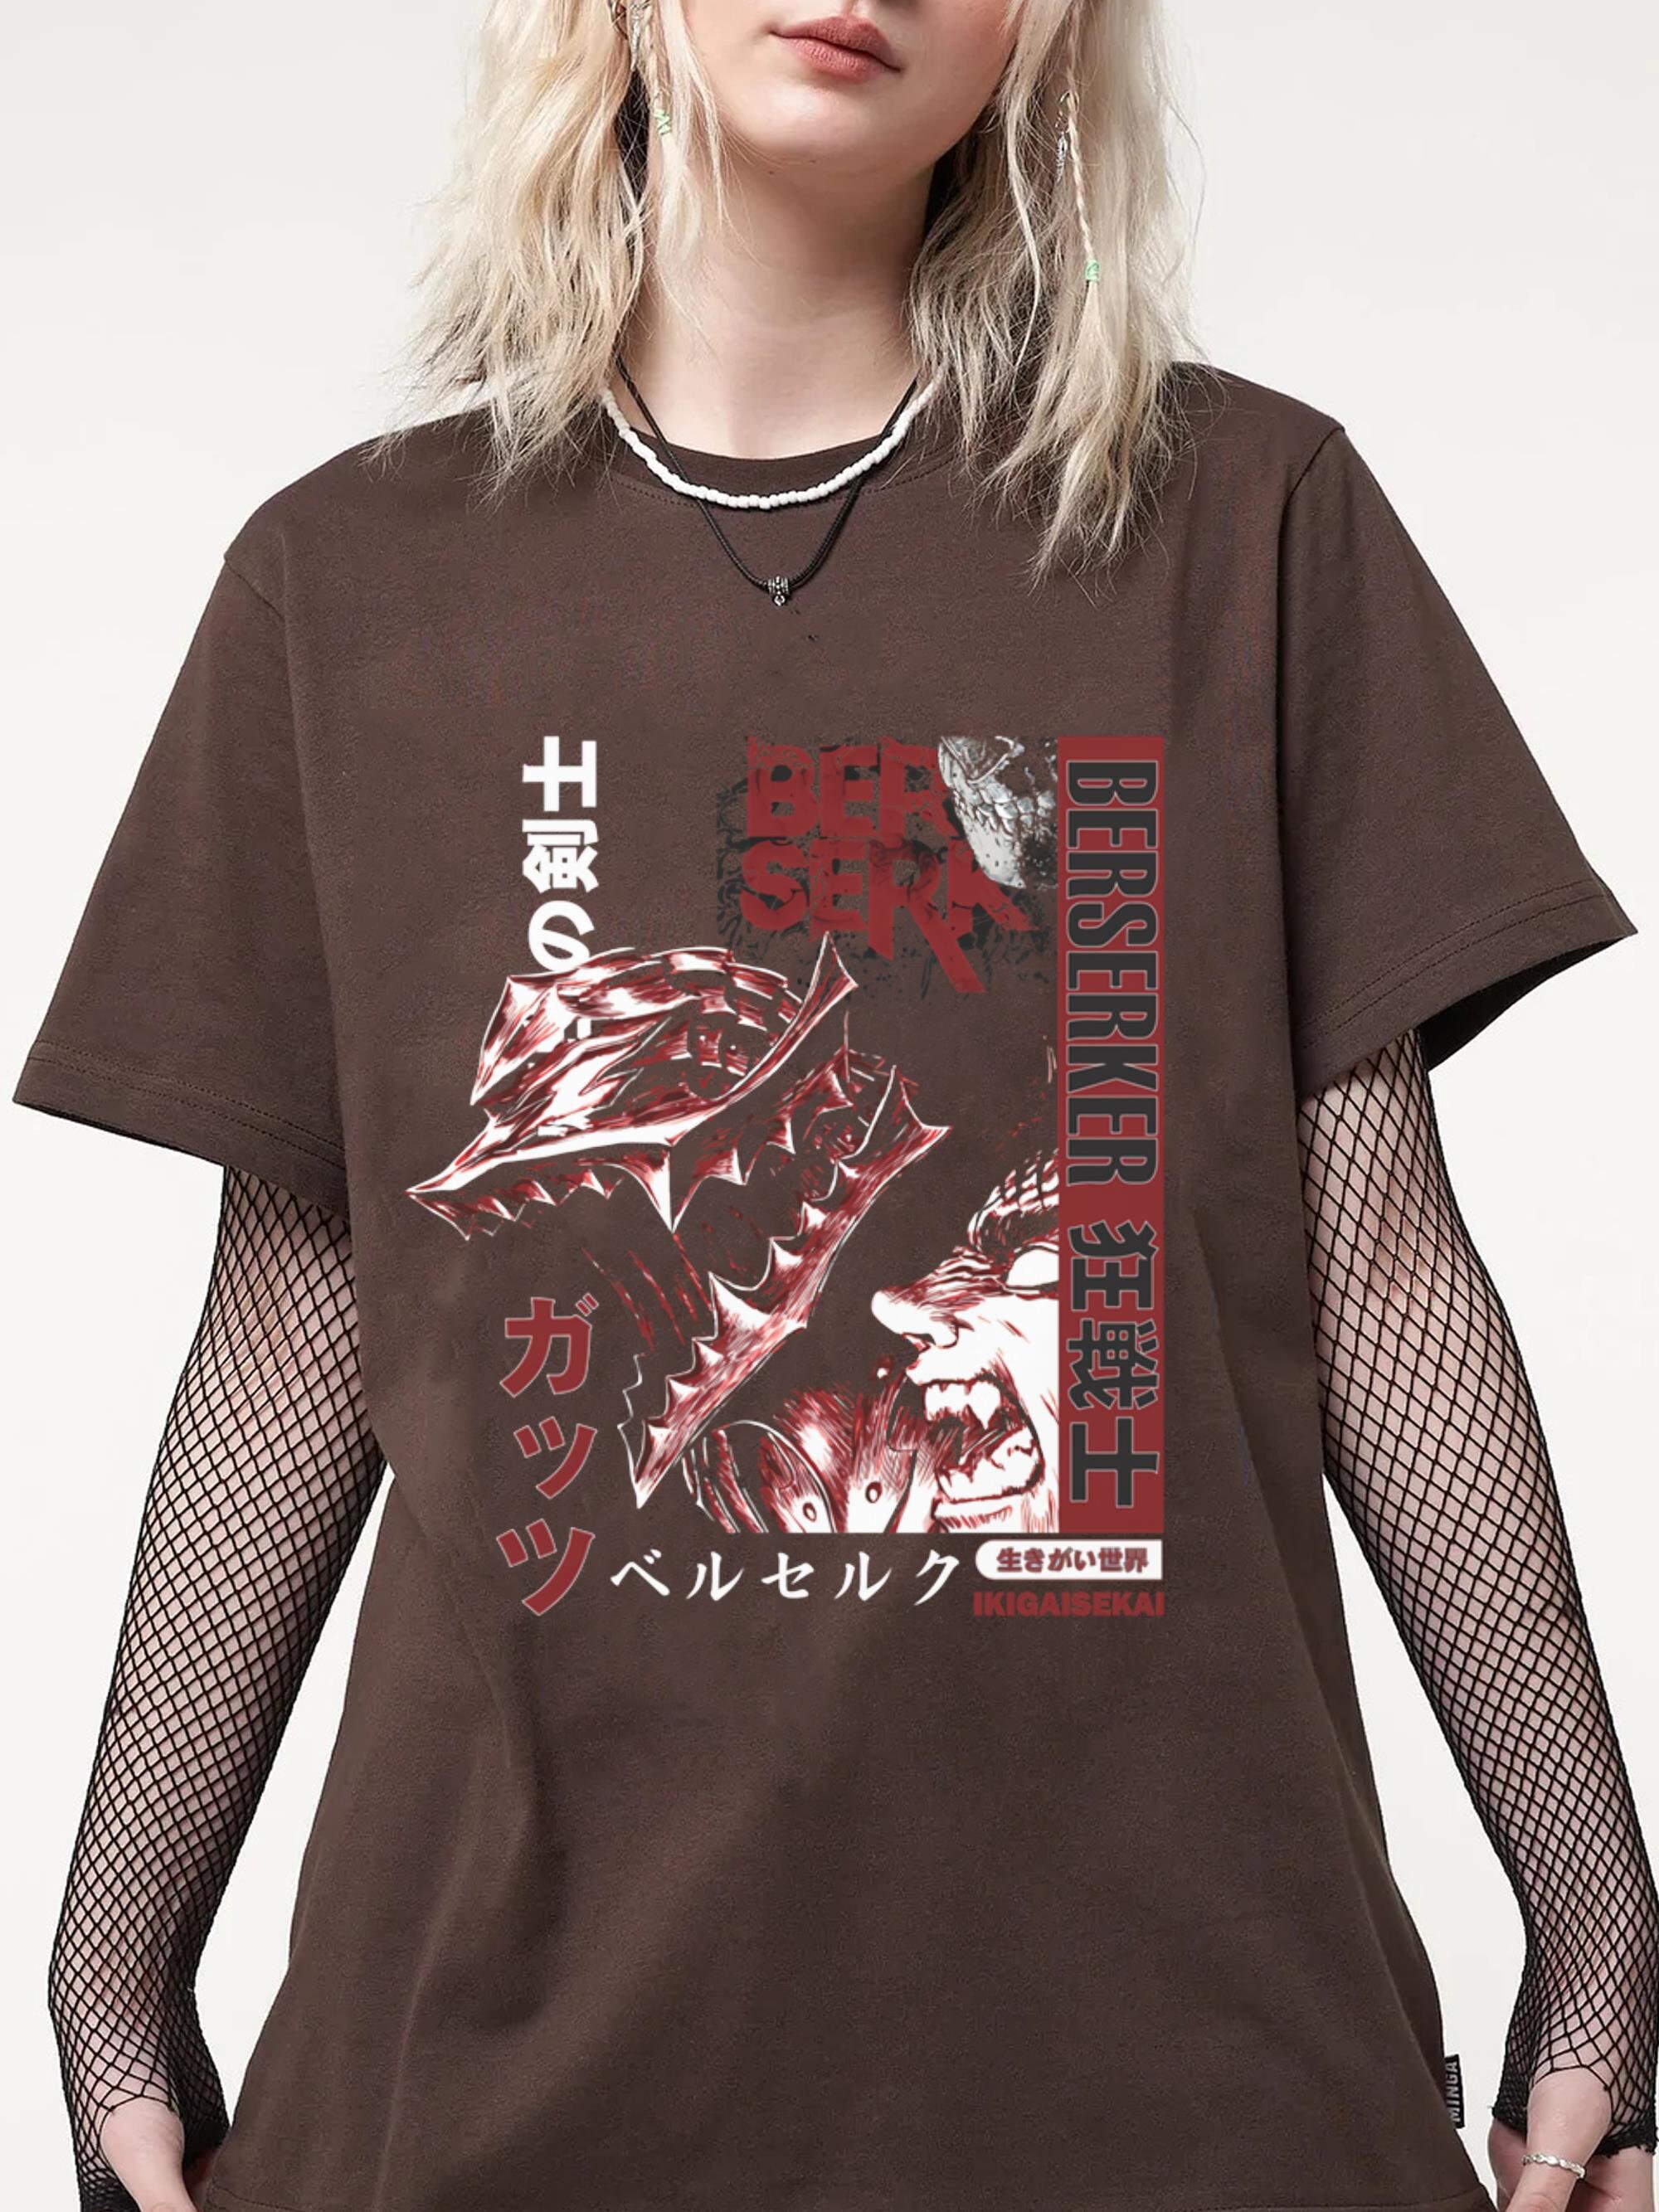 Berserker Anime Unisex T-Shirt